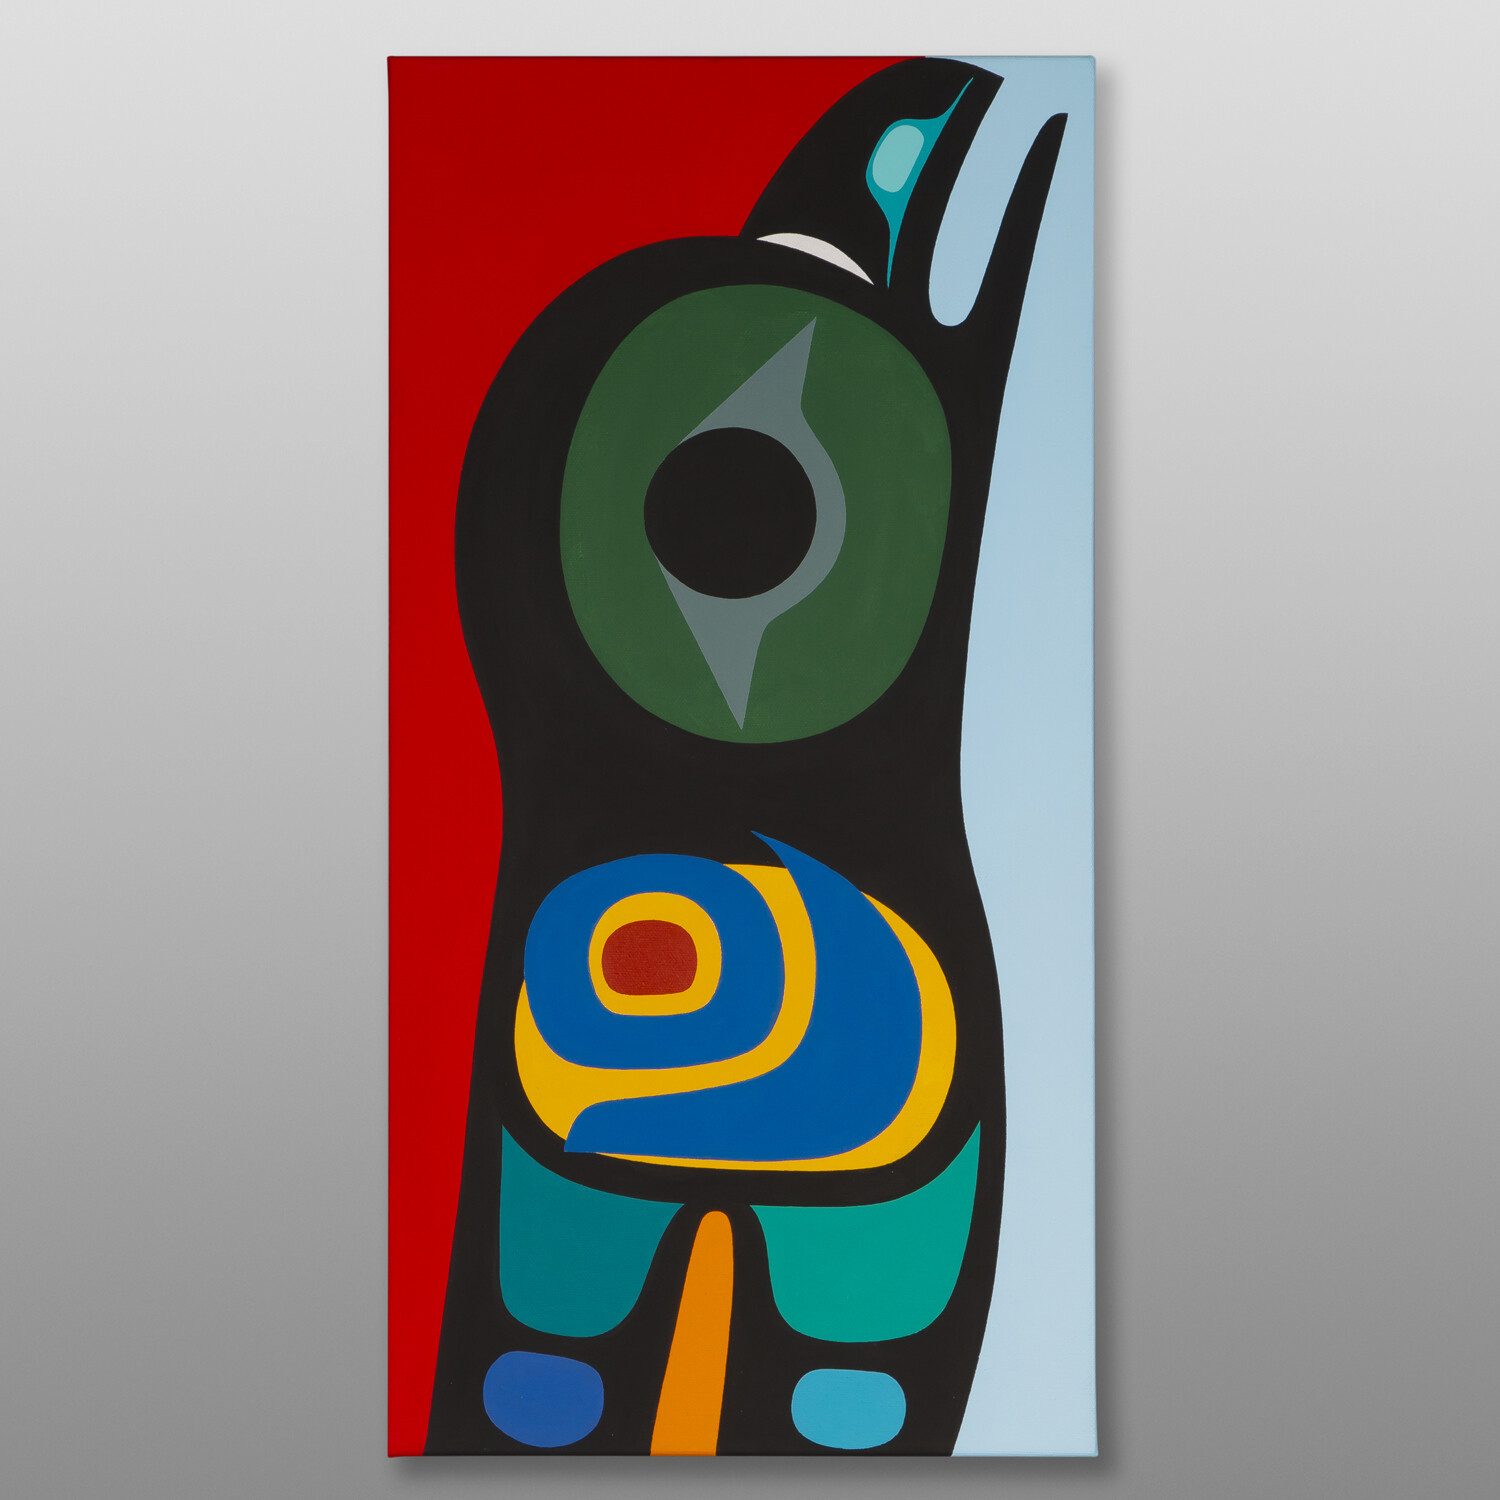 Happy Raven
Steve Smith - Dla'kwagila
Oweekeno
Acrylic on canvas
24" x 12" x 1½"
$1600